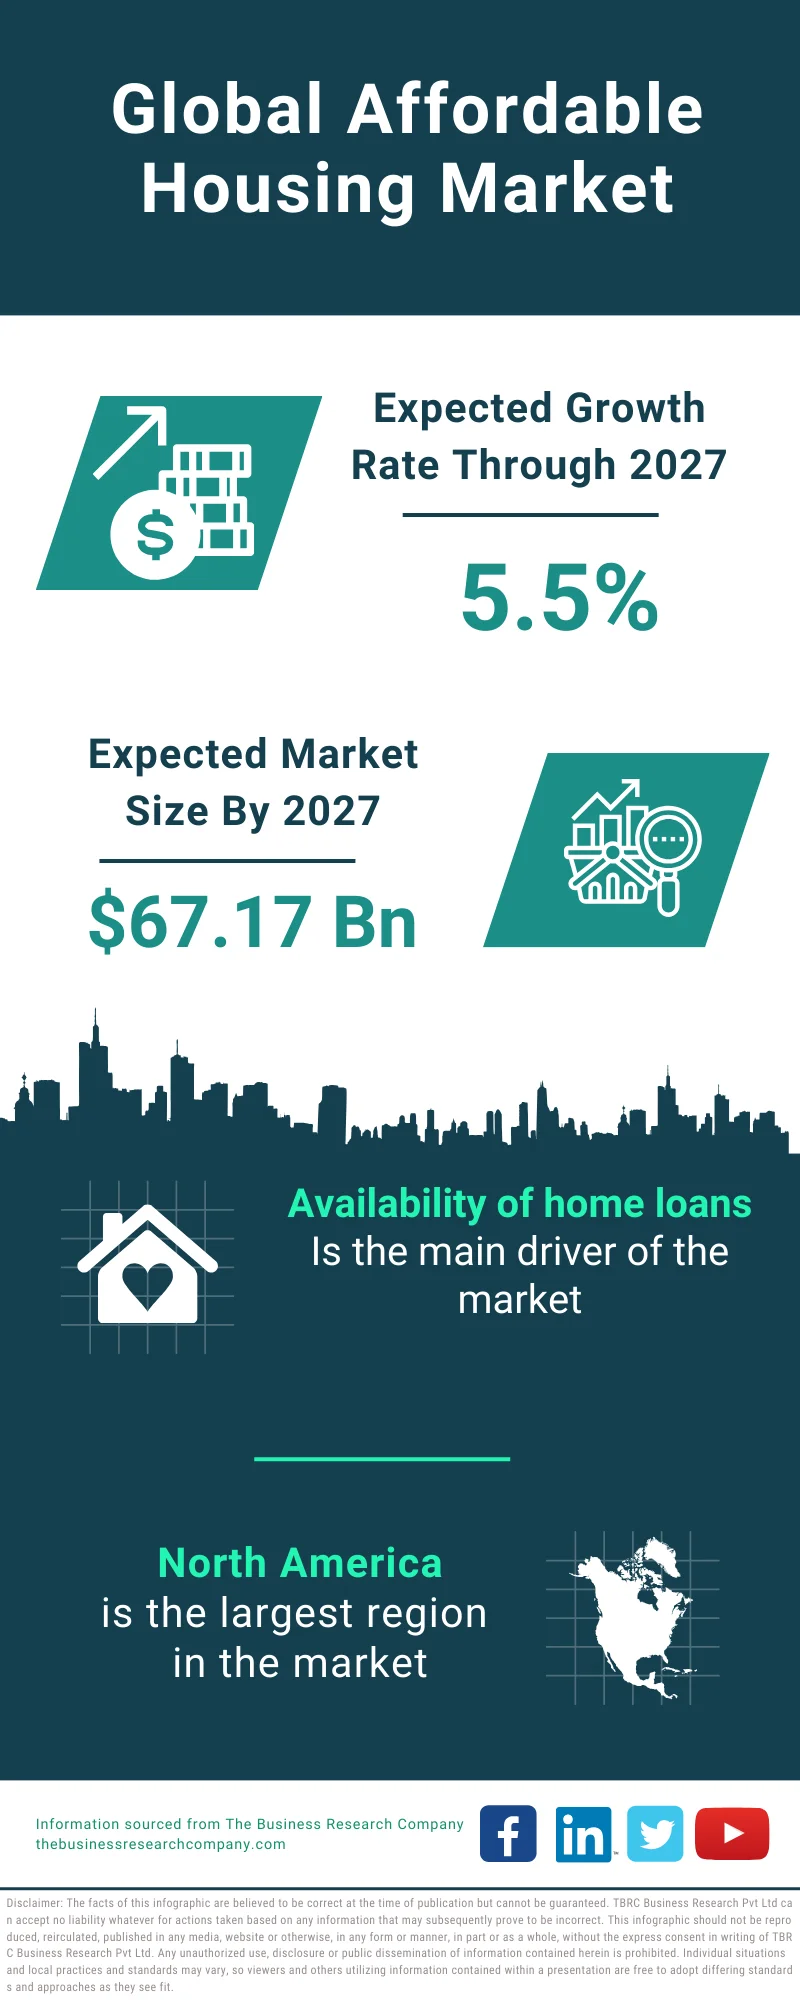 Affordable Housing Global Market Report 2023 